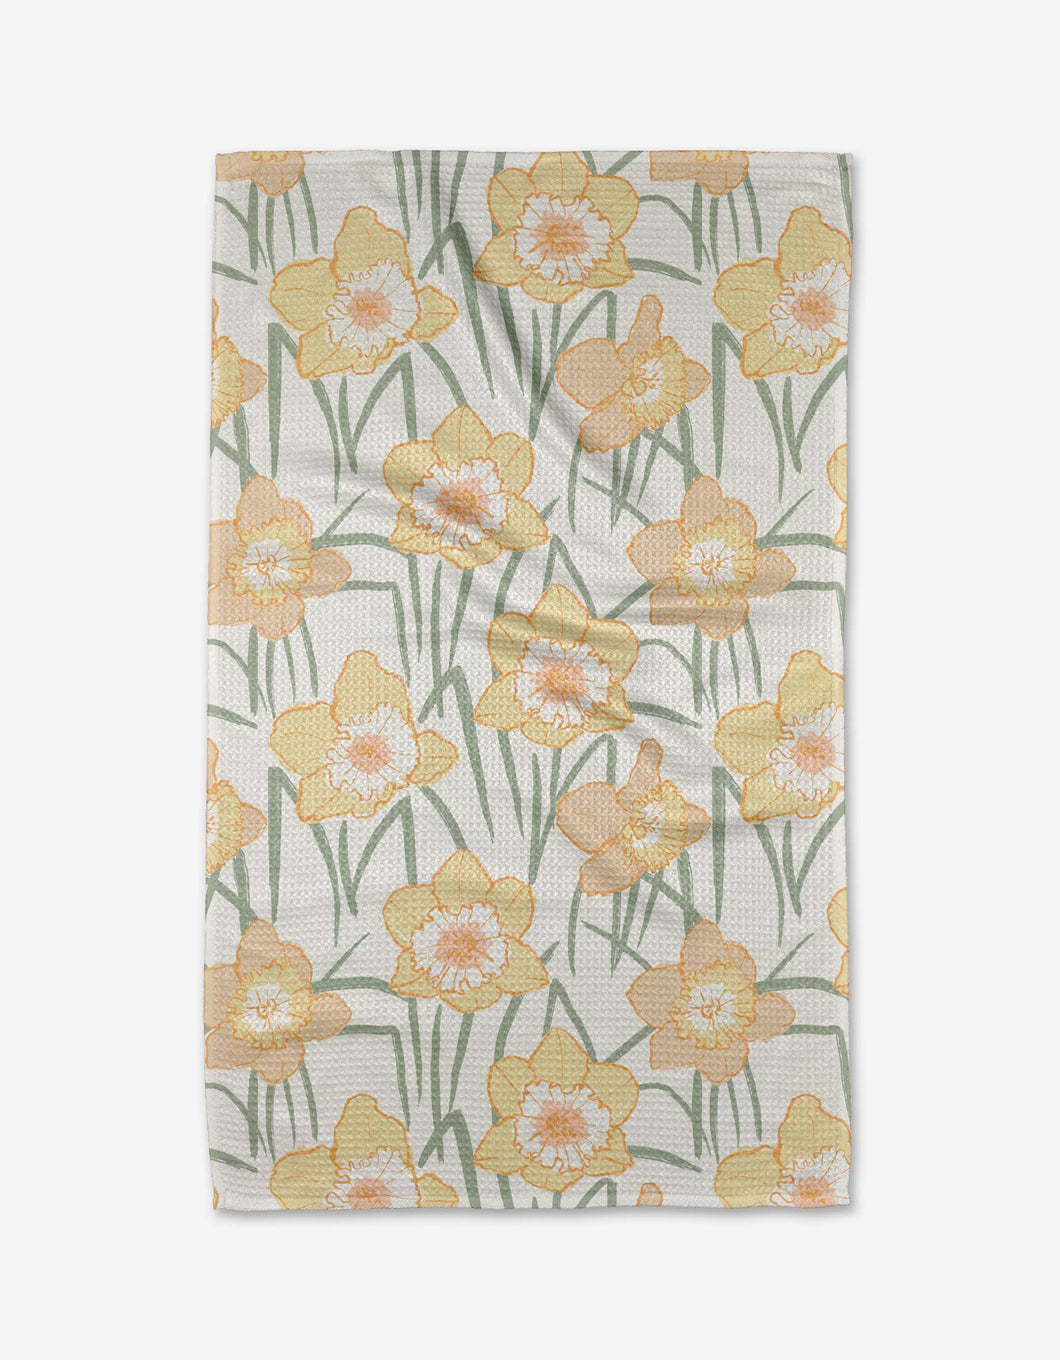 Geometry - Spring Daffodil Fields Tea Towel